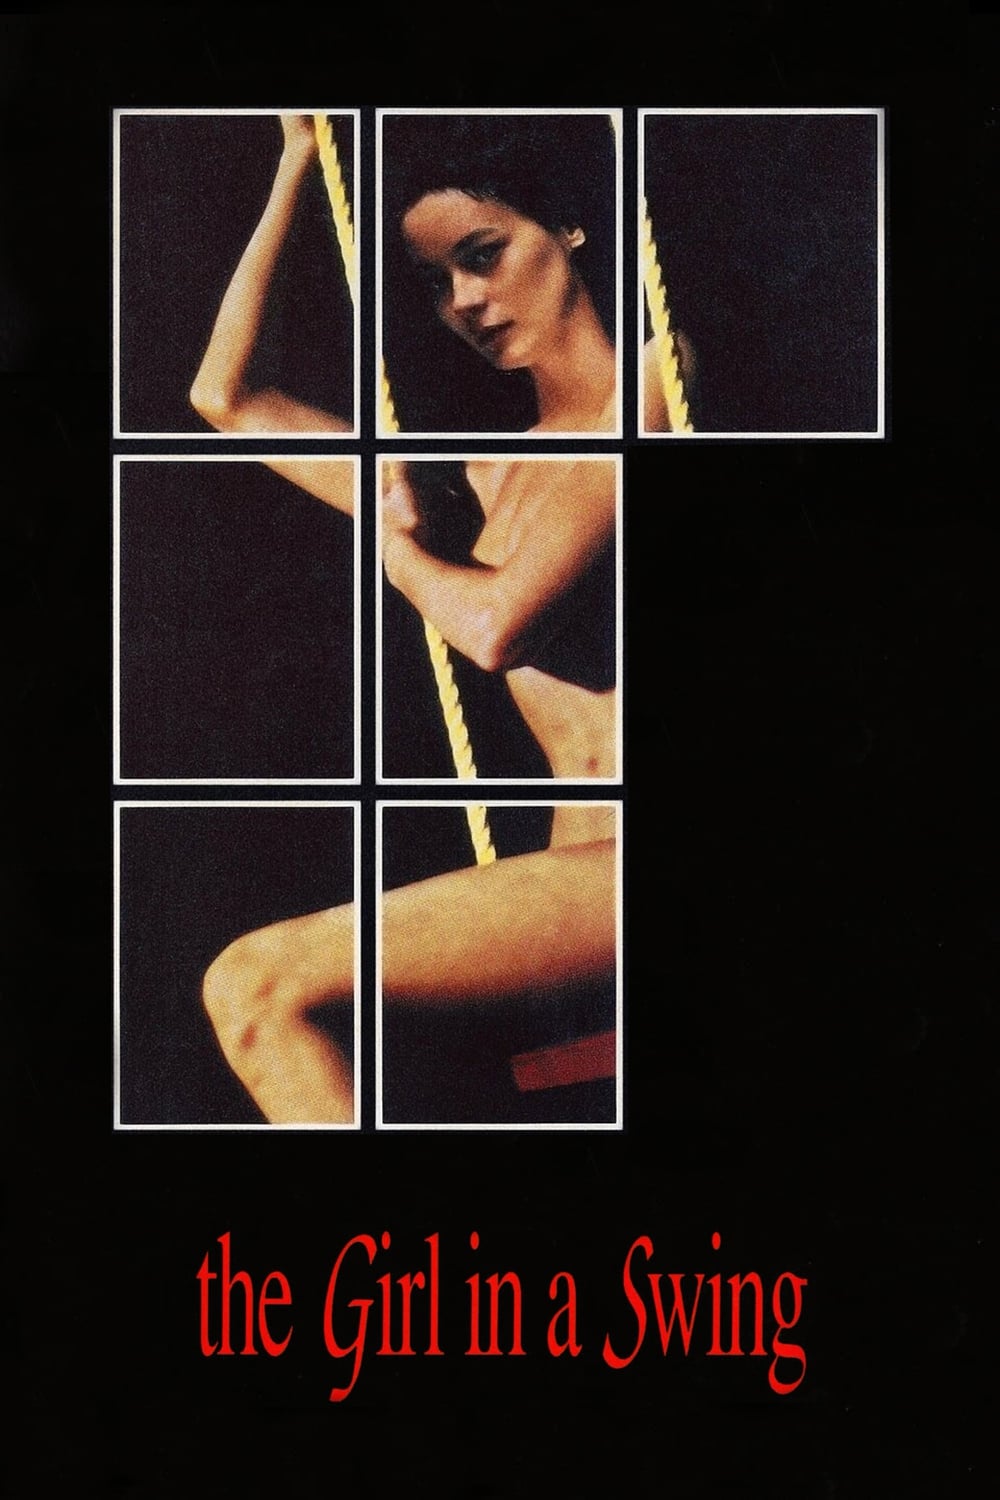 The Girl in a Swing (1988)